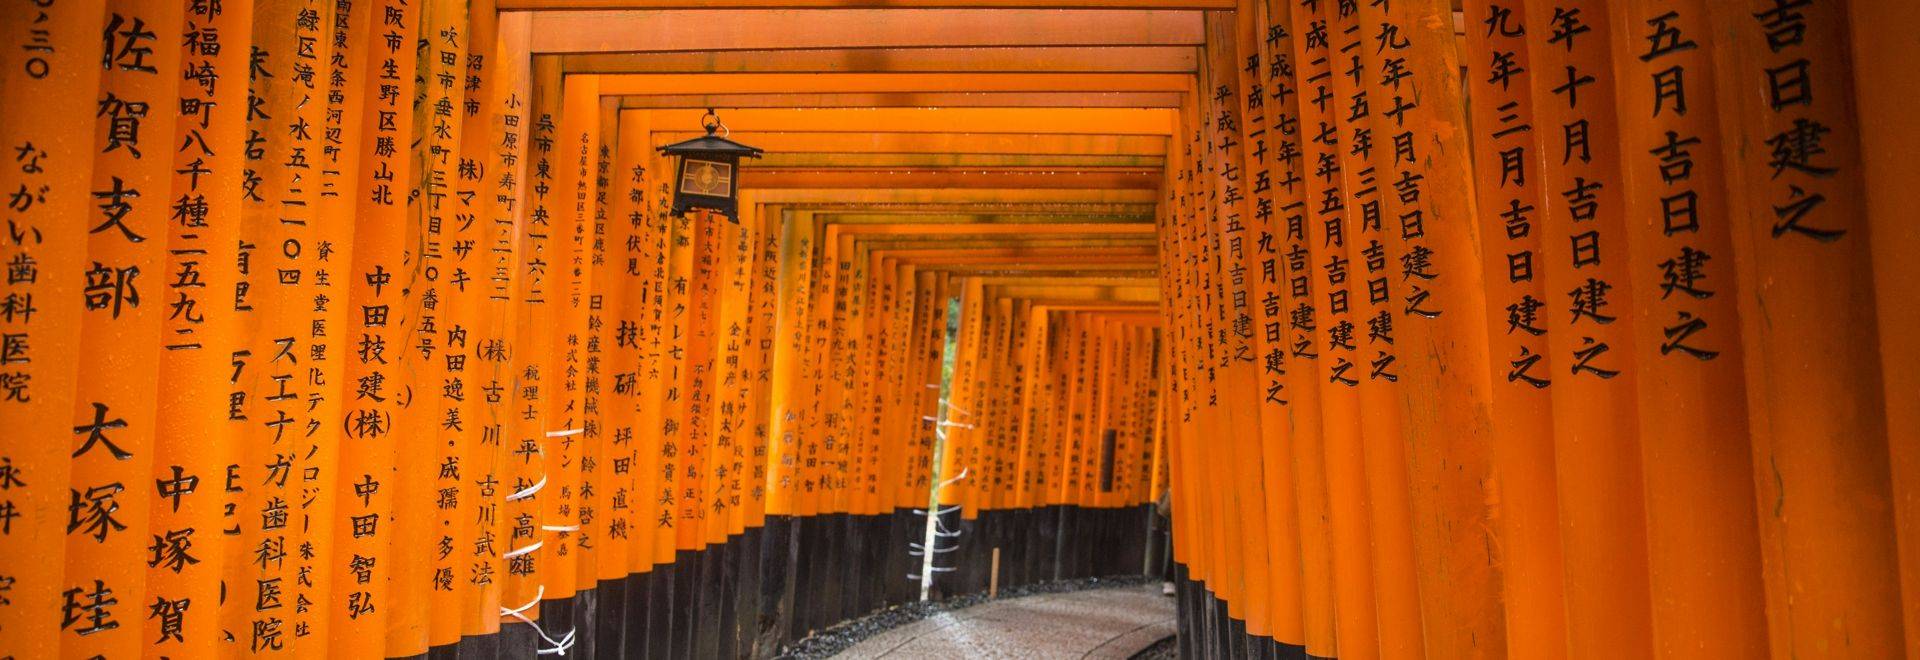 Japan Kyoto Fushimi Inari-Taisha 1000 Torii Gates - IMG5775 Lg RGB.jpg